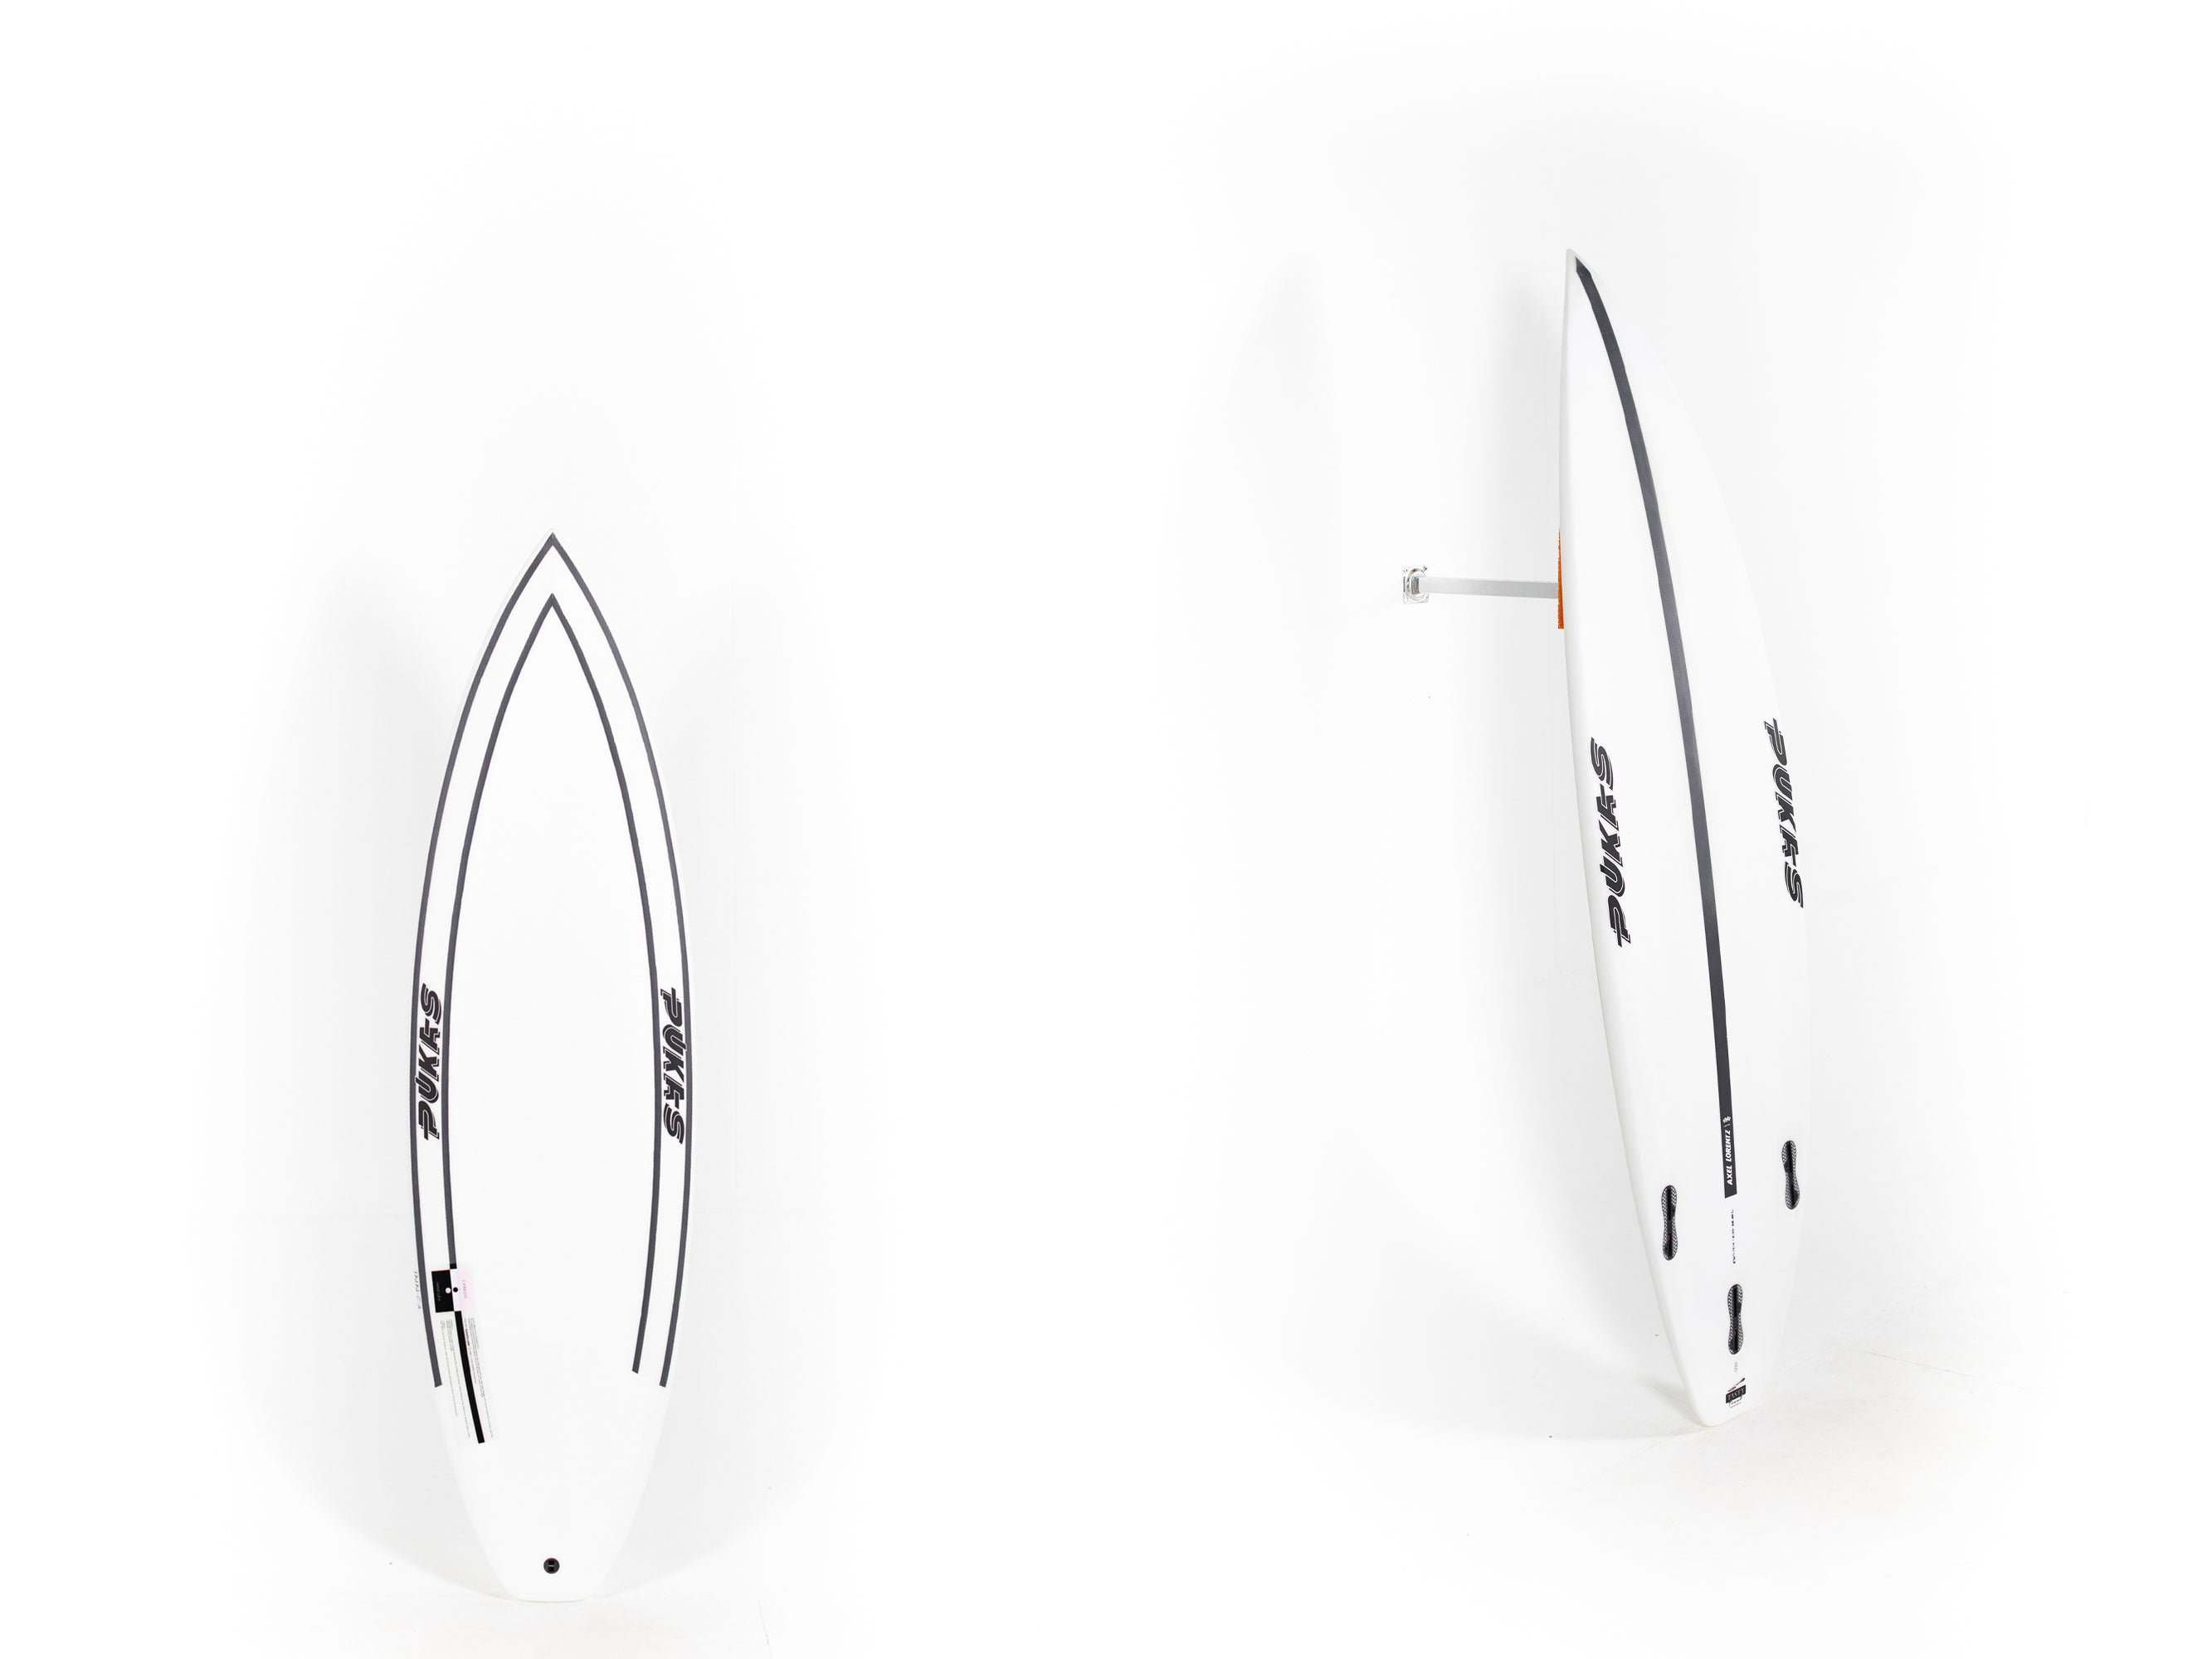 Pukas Surfboard - INNCA Tech - TASTY TREAT by Axel Lorentz- 5’10” x 19,13 x 2,44 x 28,86L